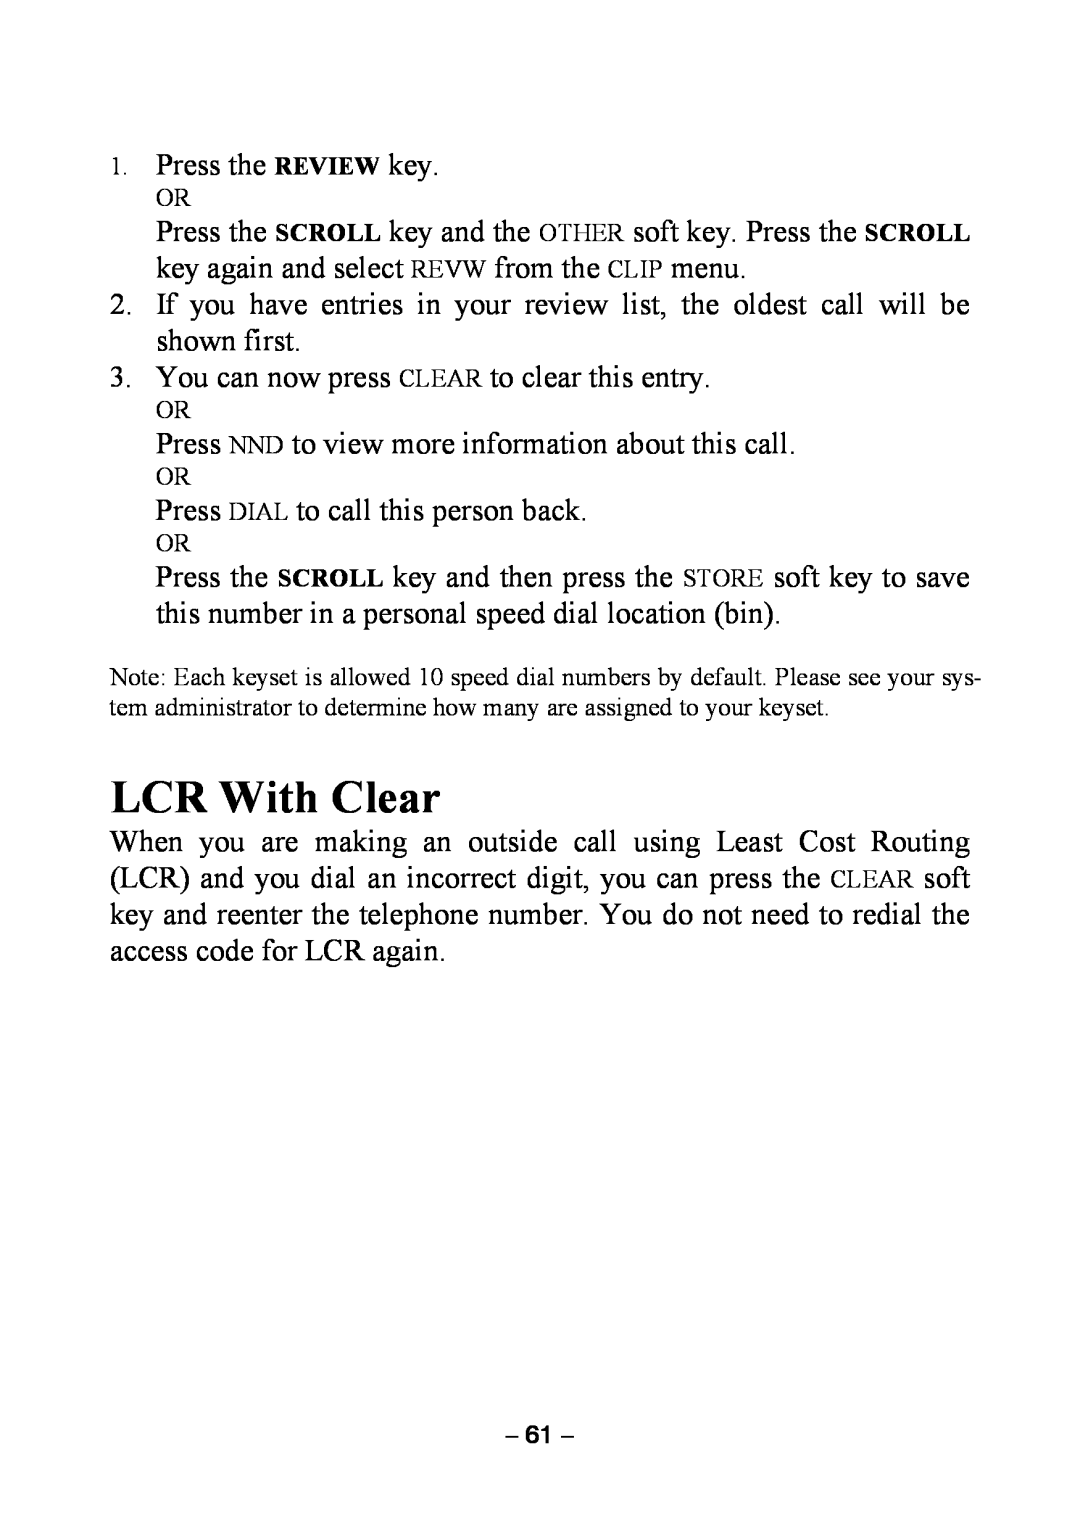 Samsung DCS KEYSET manual LCR With Clear 